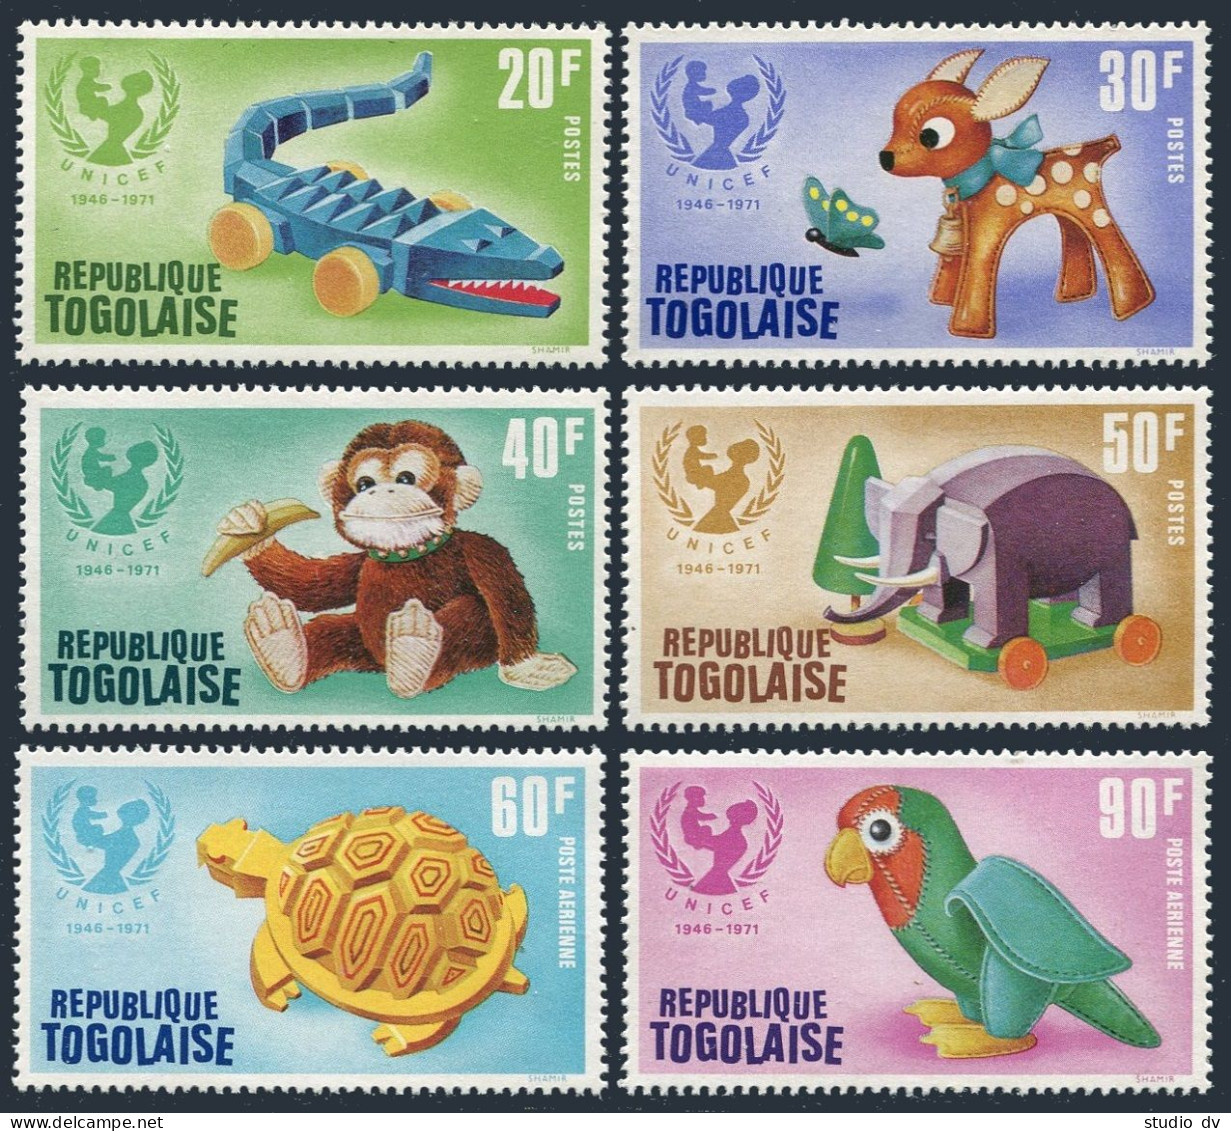 Togo 794-C168,C168a,MNH.Mi 896-901,Bl.60. UNICEF 1971.Toys:animals,turtle,parrot